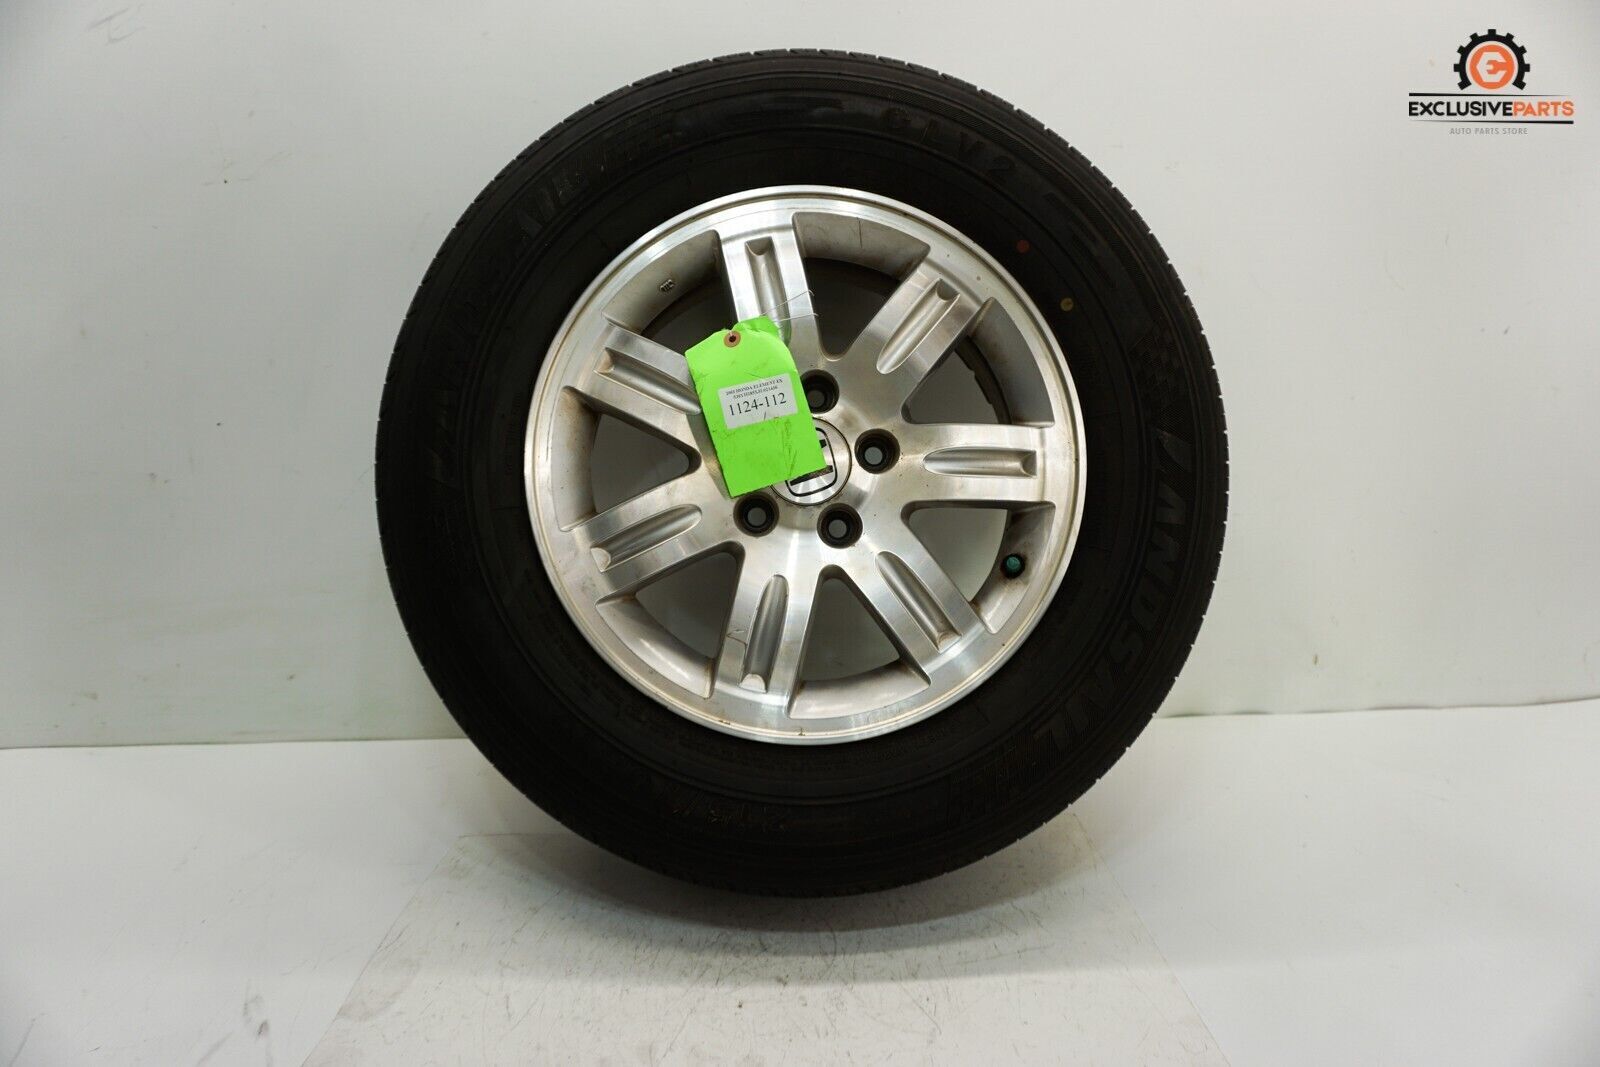 03-11 Honda Element EX OEM Wheel Rim w/ Tire 215/70R16 & Center Cap Silver 1124